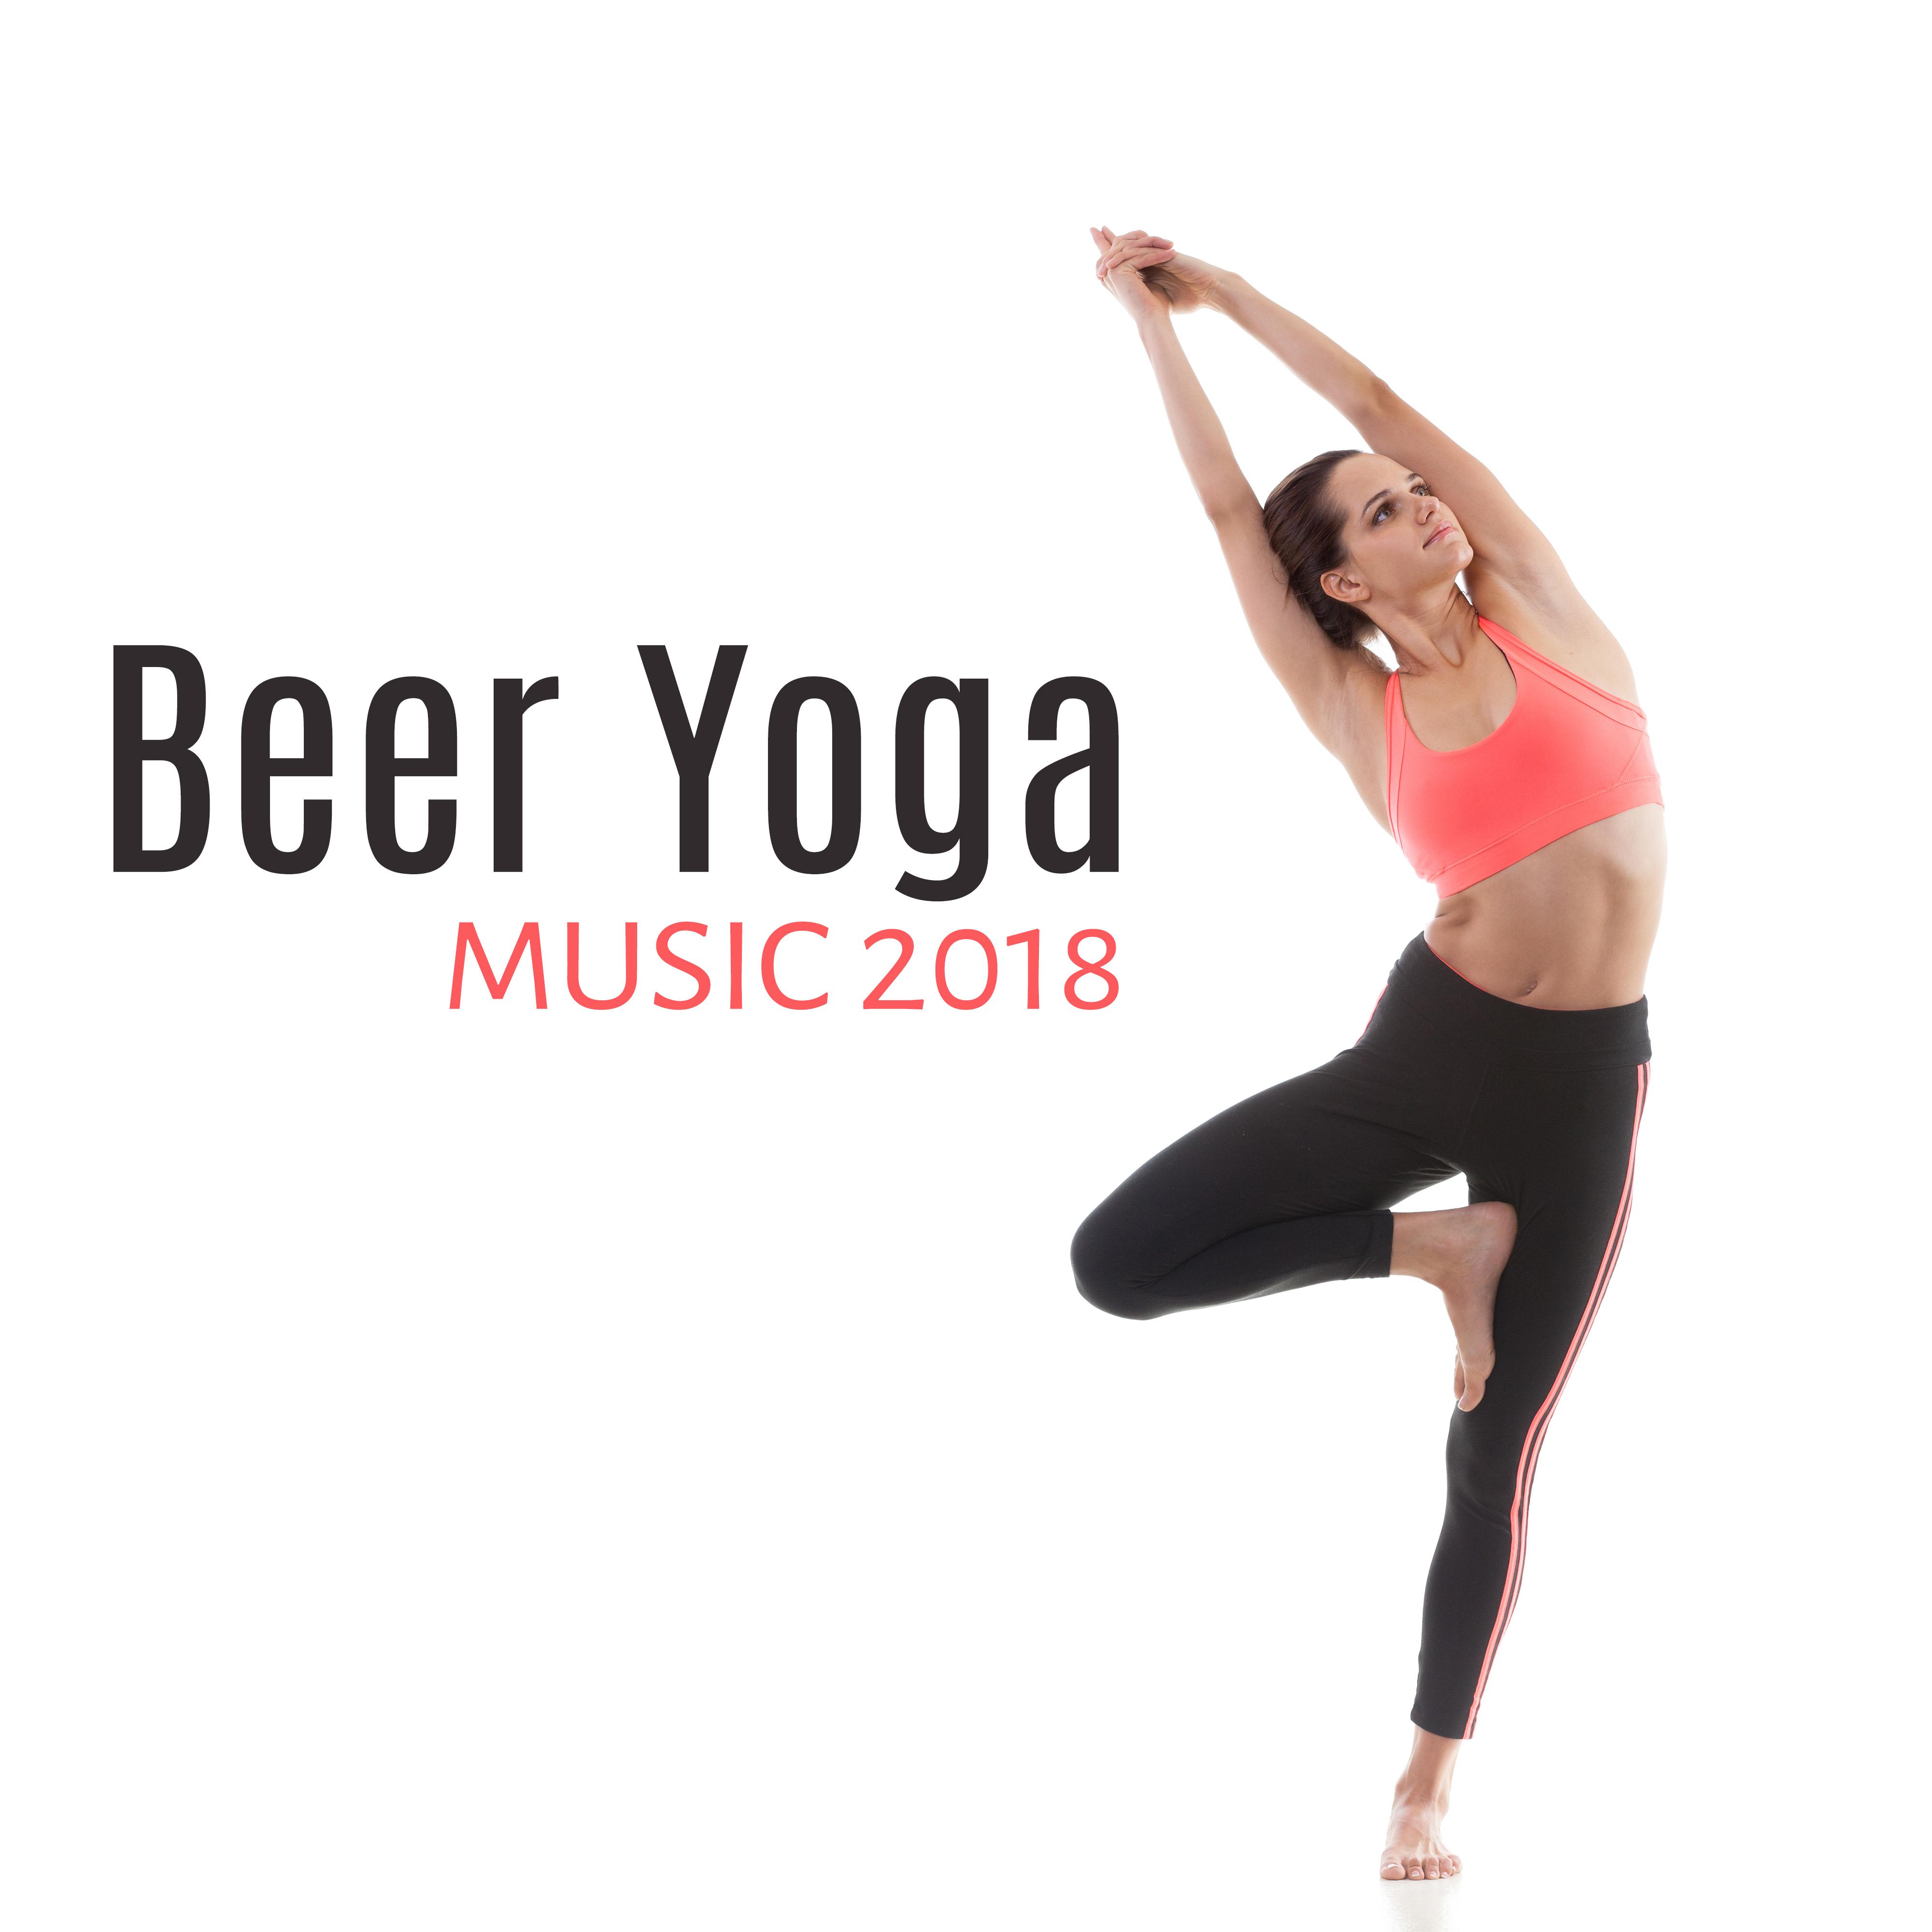 Beer Yoga Music 2018